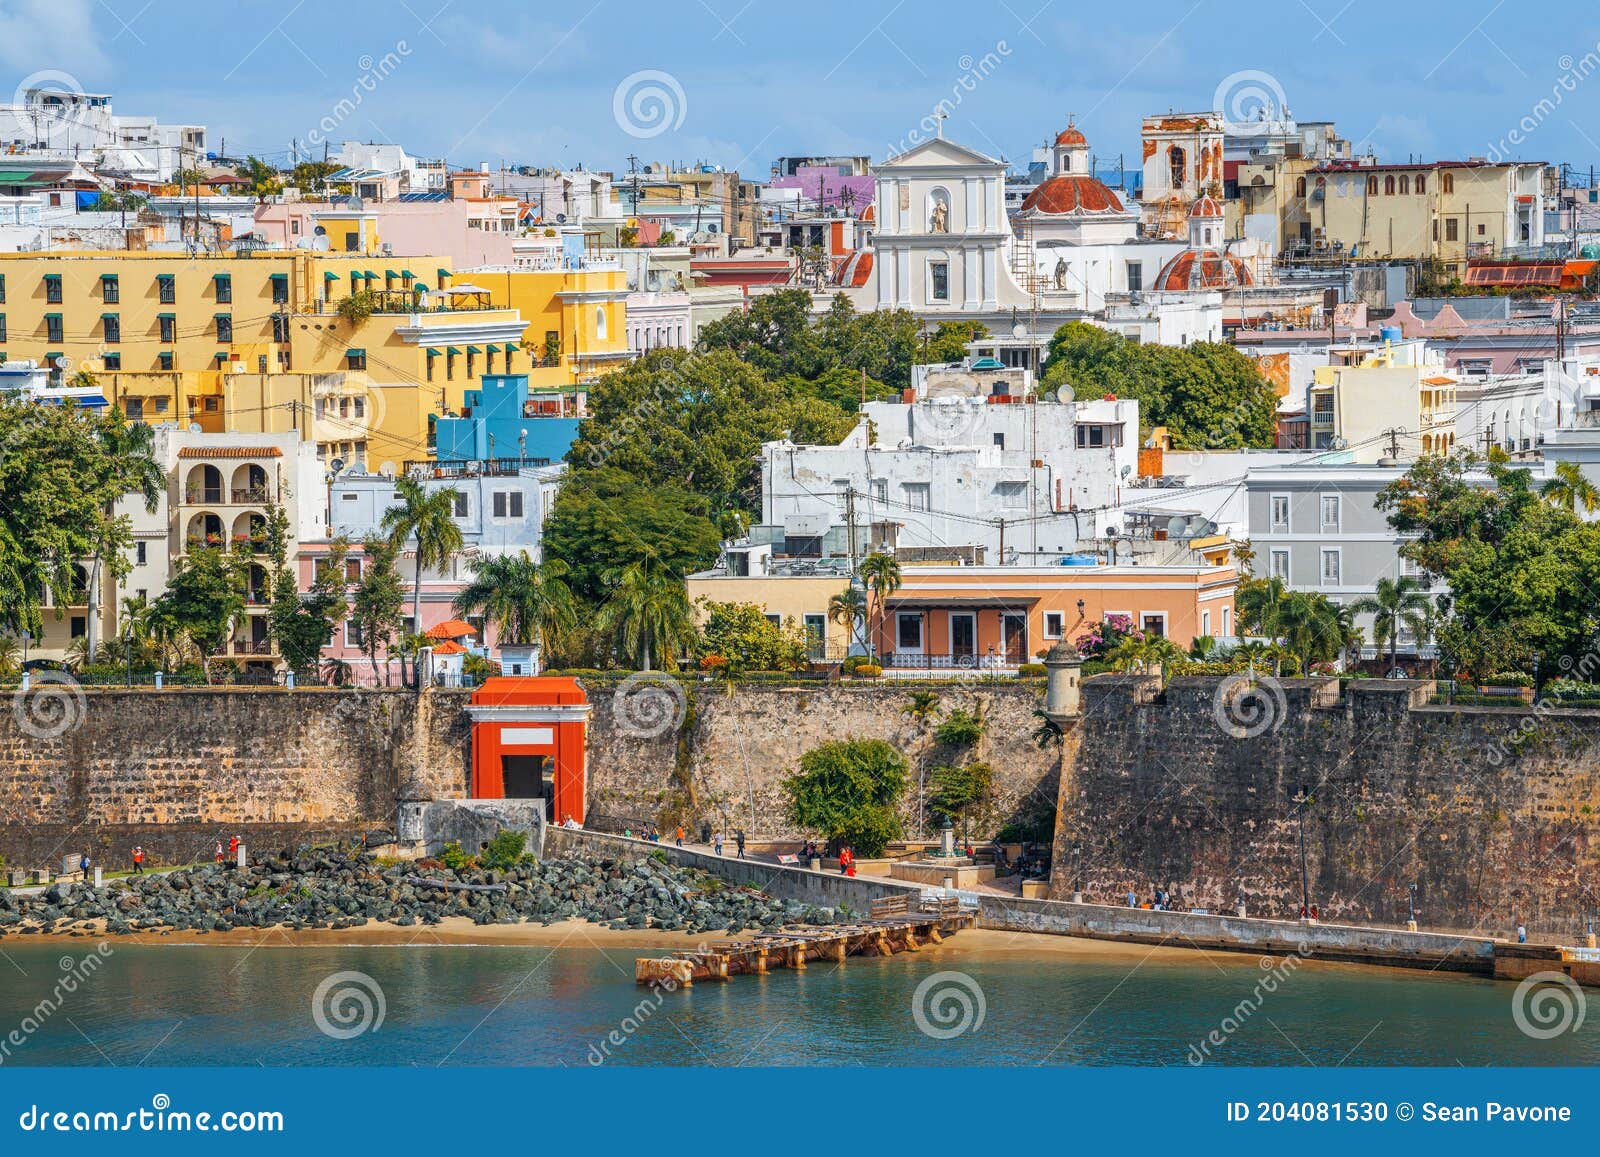 old san juan, puerto rico on the water